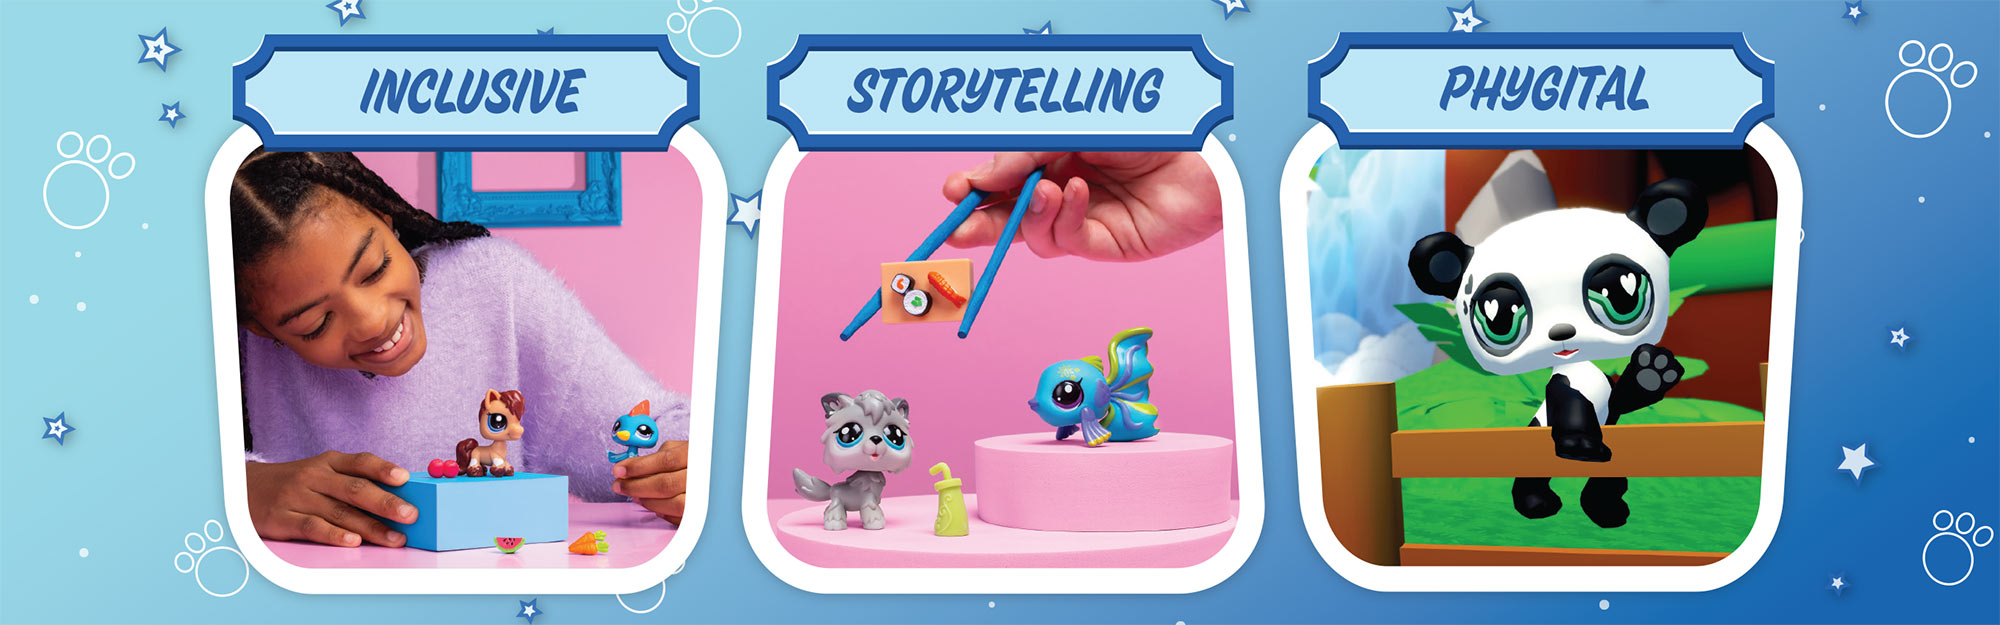 Littlest Pet Shop - Inclusive - Storytelling - Phygital